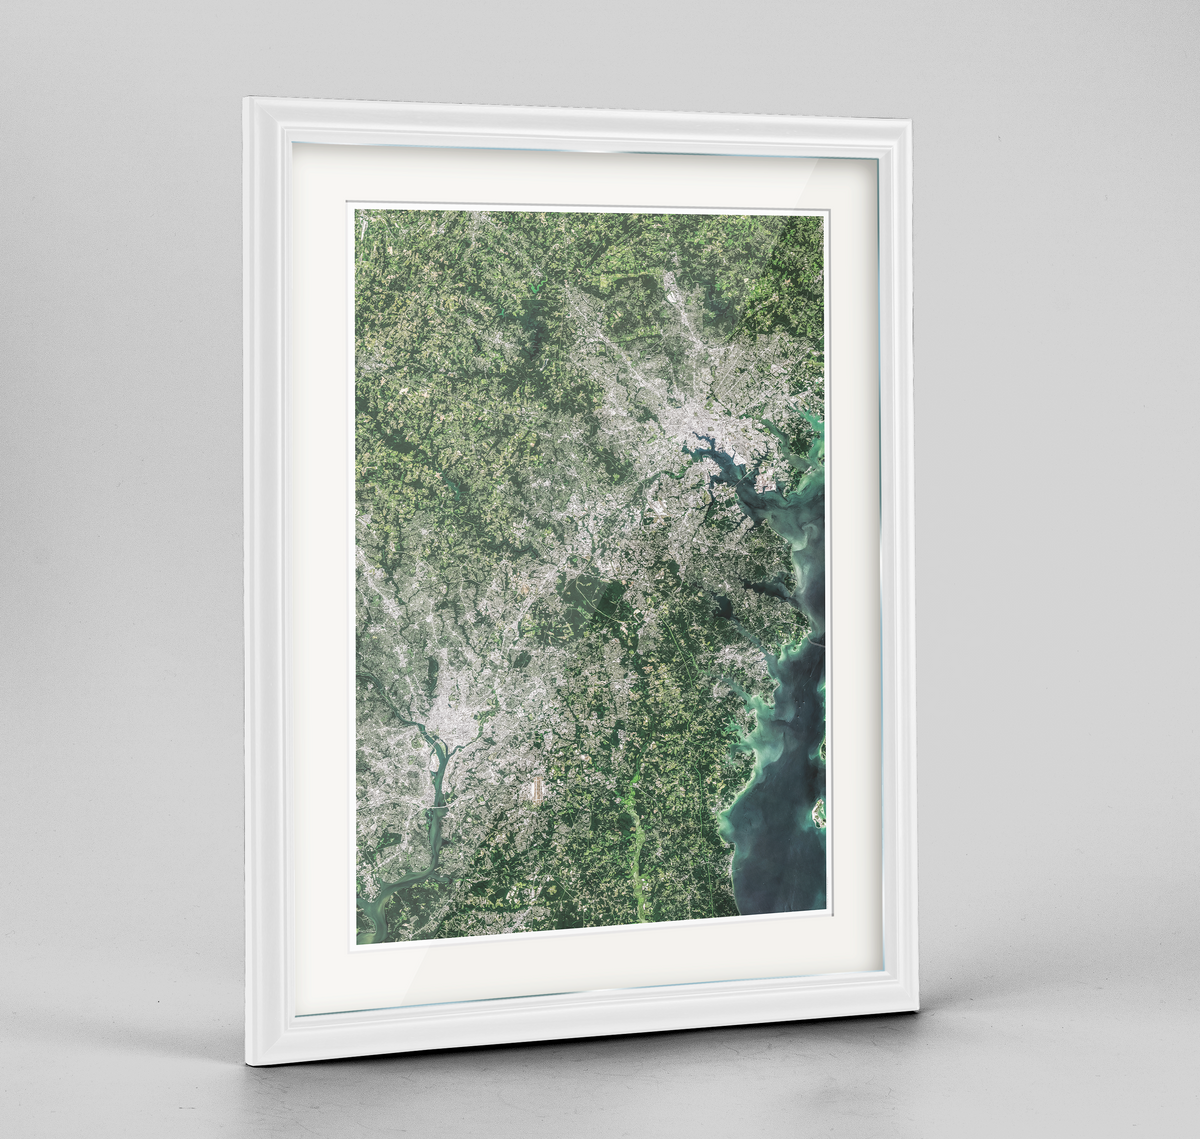 DC/Baltimore Earth Photography Art Print - Framed